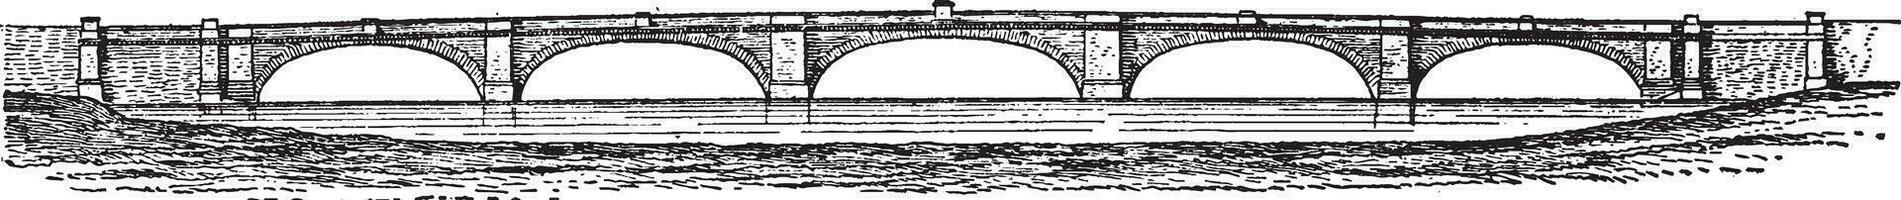 Londres Novo ponte, vintage ilustração. vetor